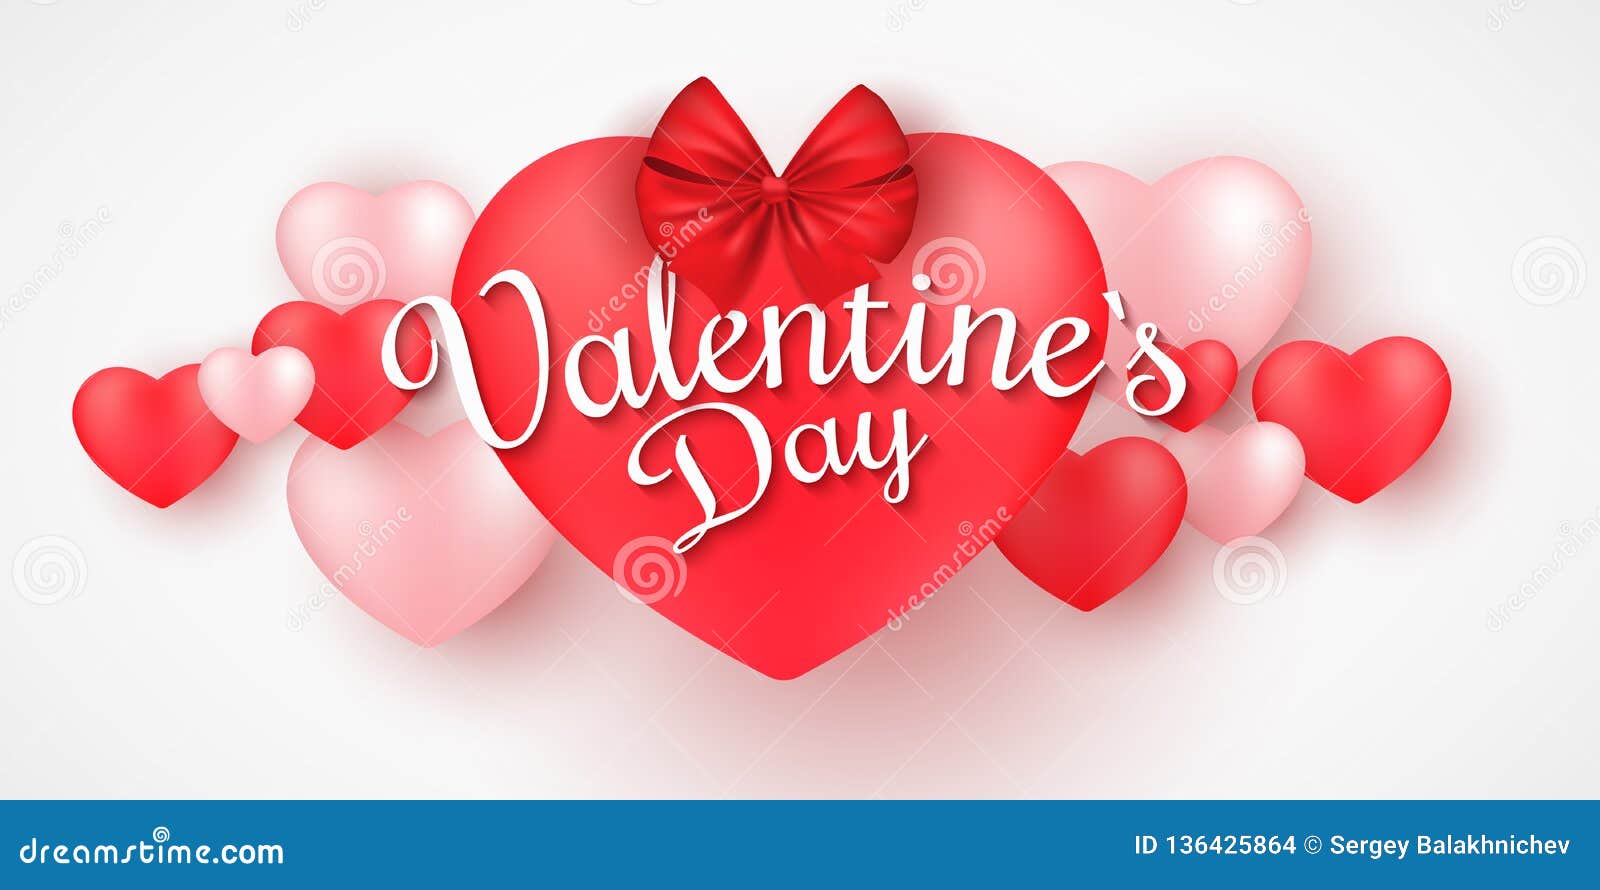 Valentine\u2019s Day Centerpiece|Valentine\u2019s Day Gift|Valentine\u2019s Day Party|Home Decor